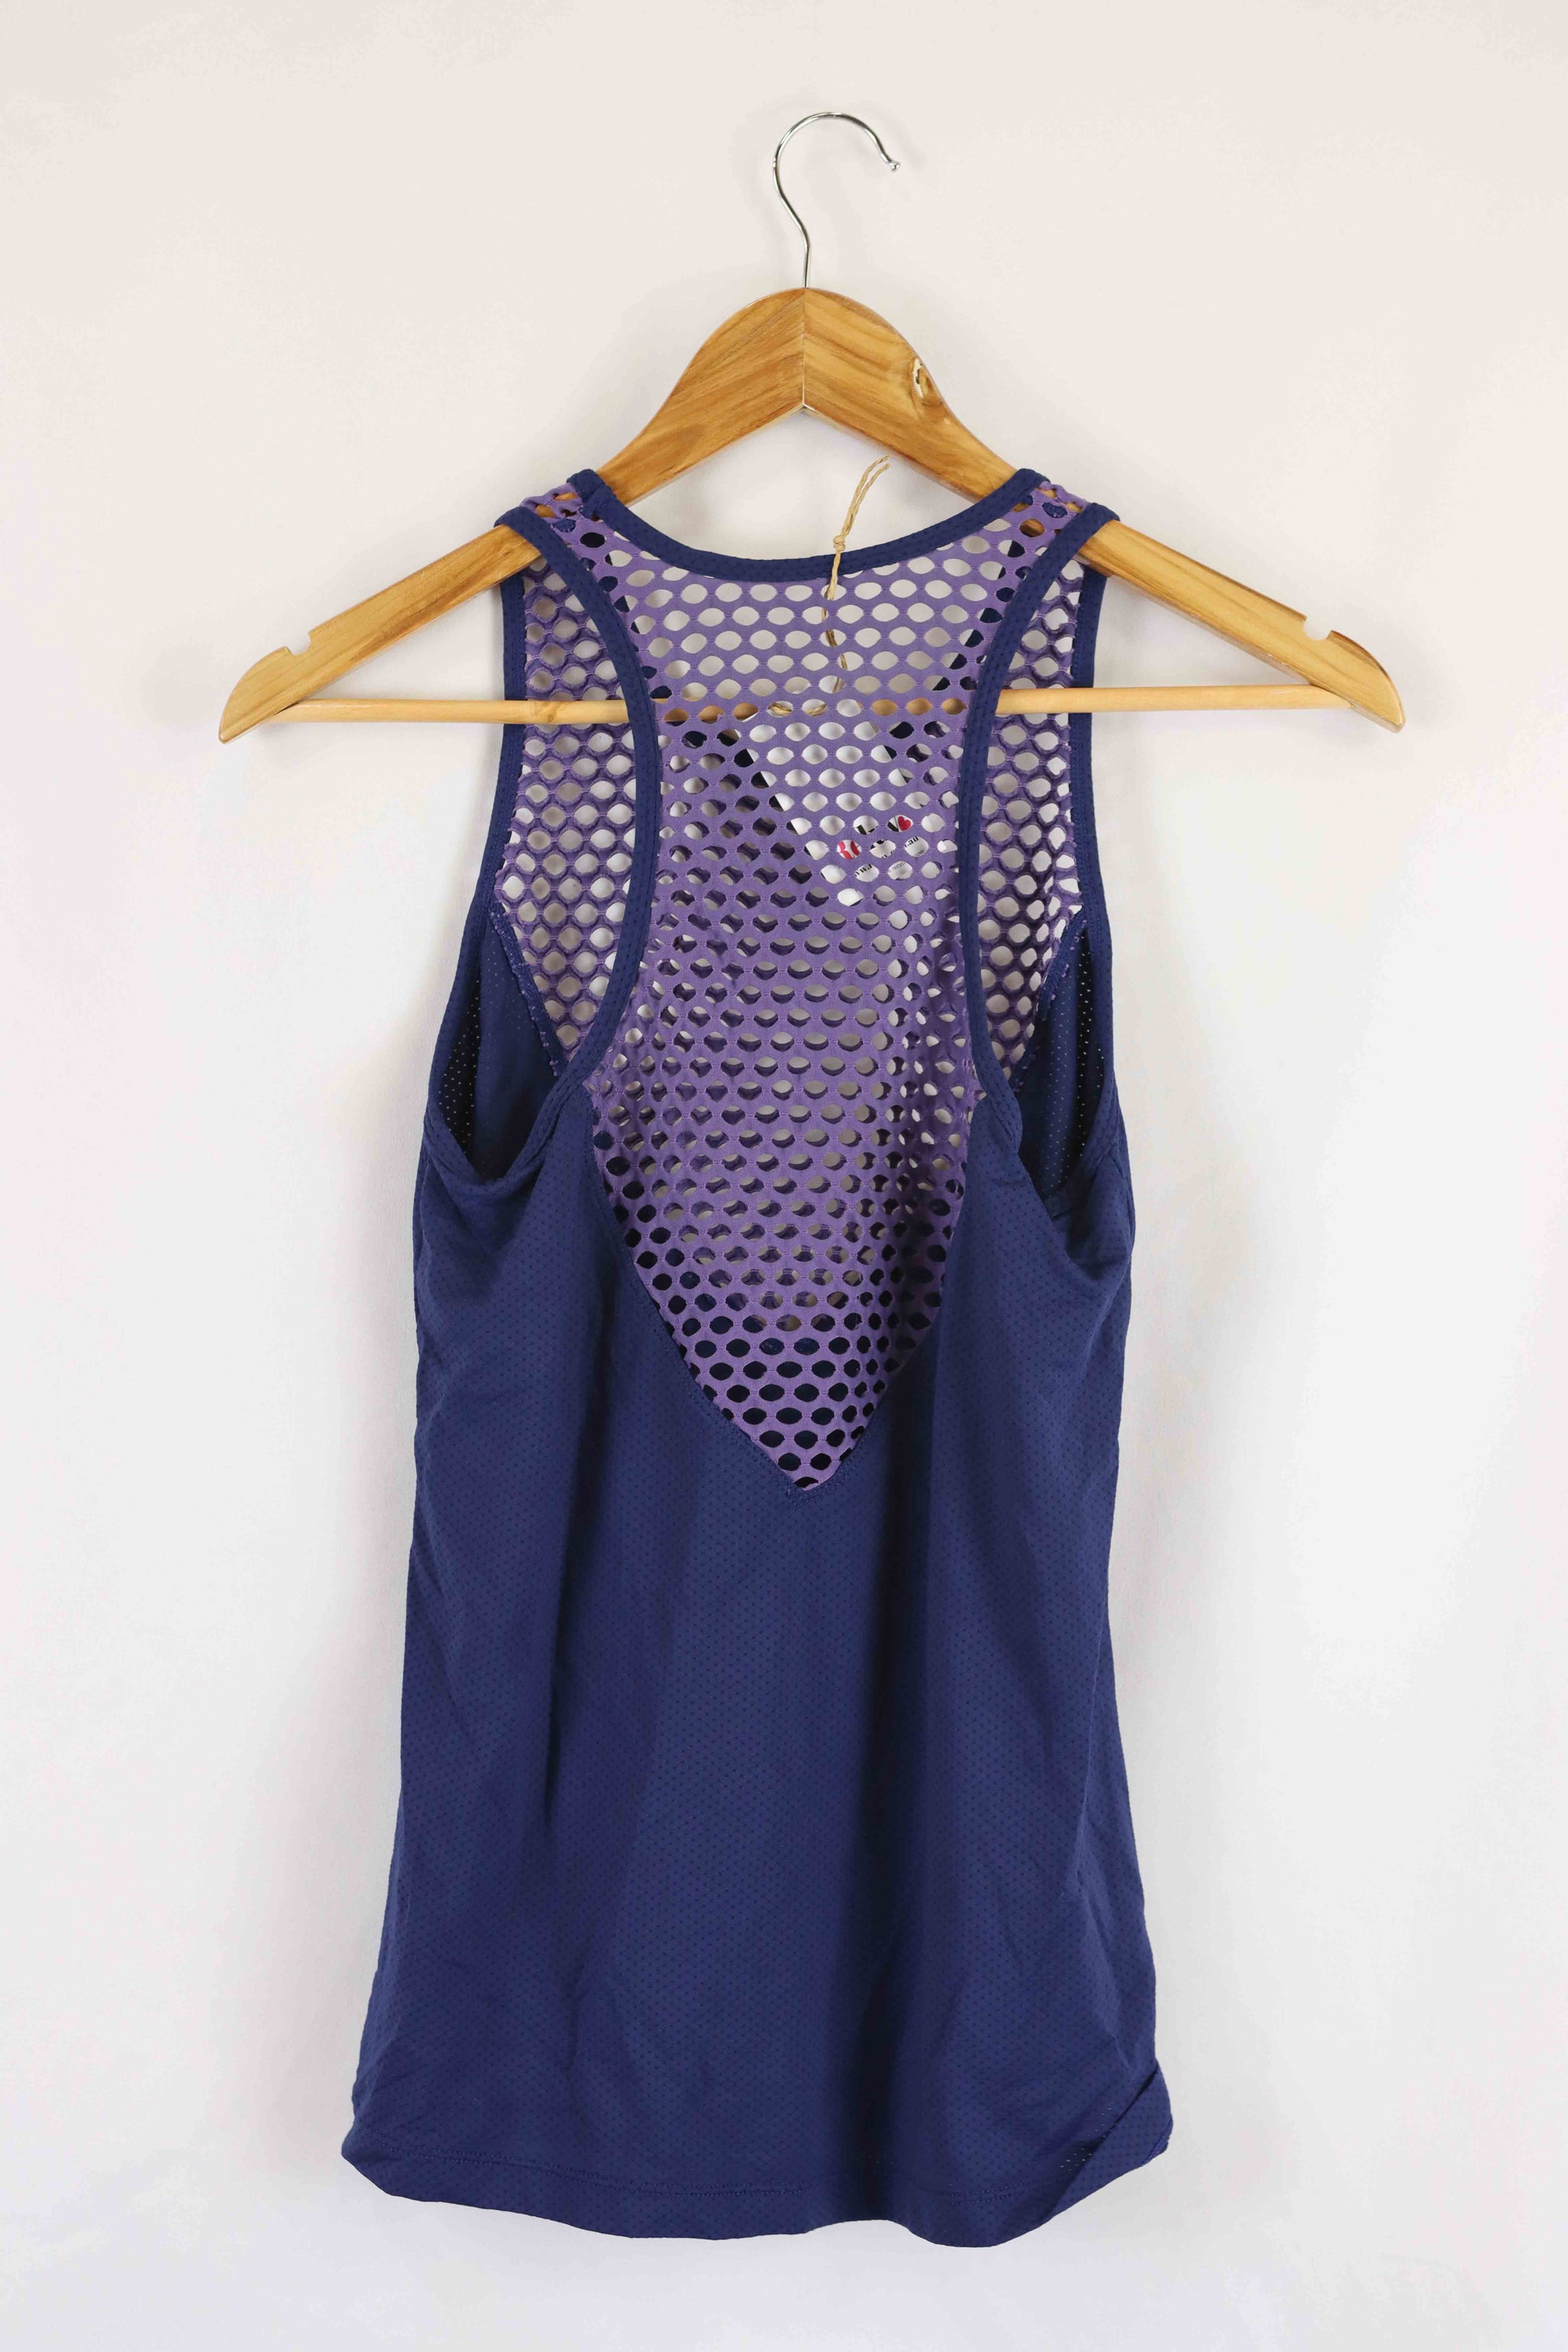 Lorna Jane Leggings Purple XS - Reluv Clothing Australia